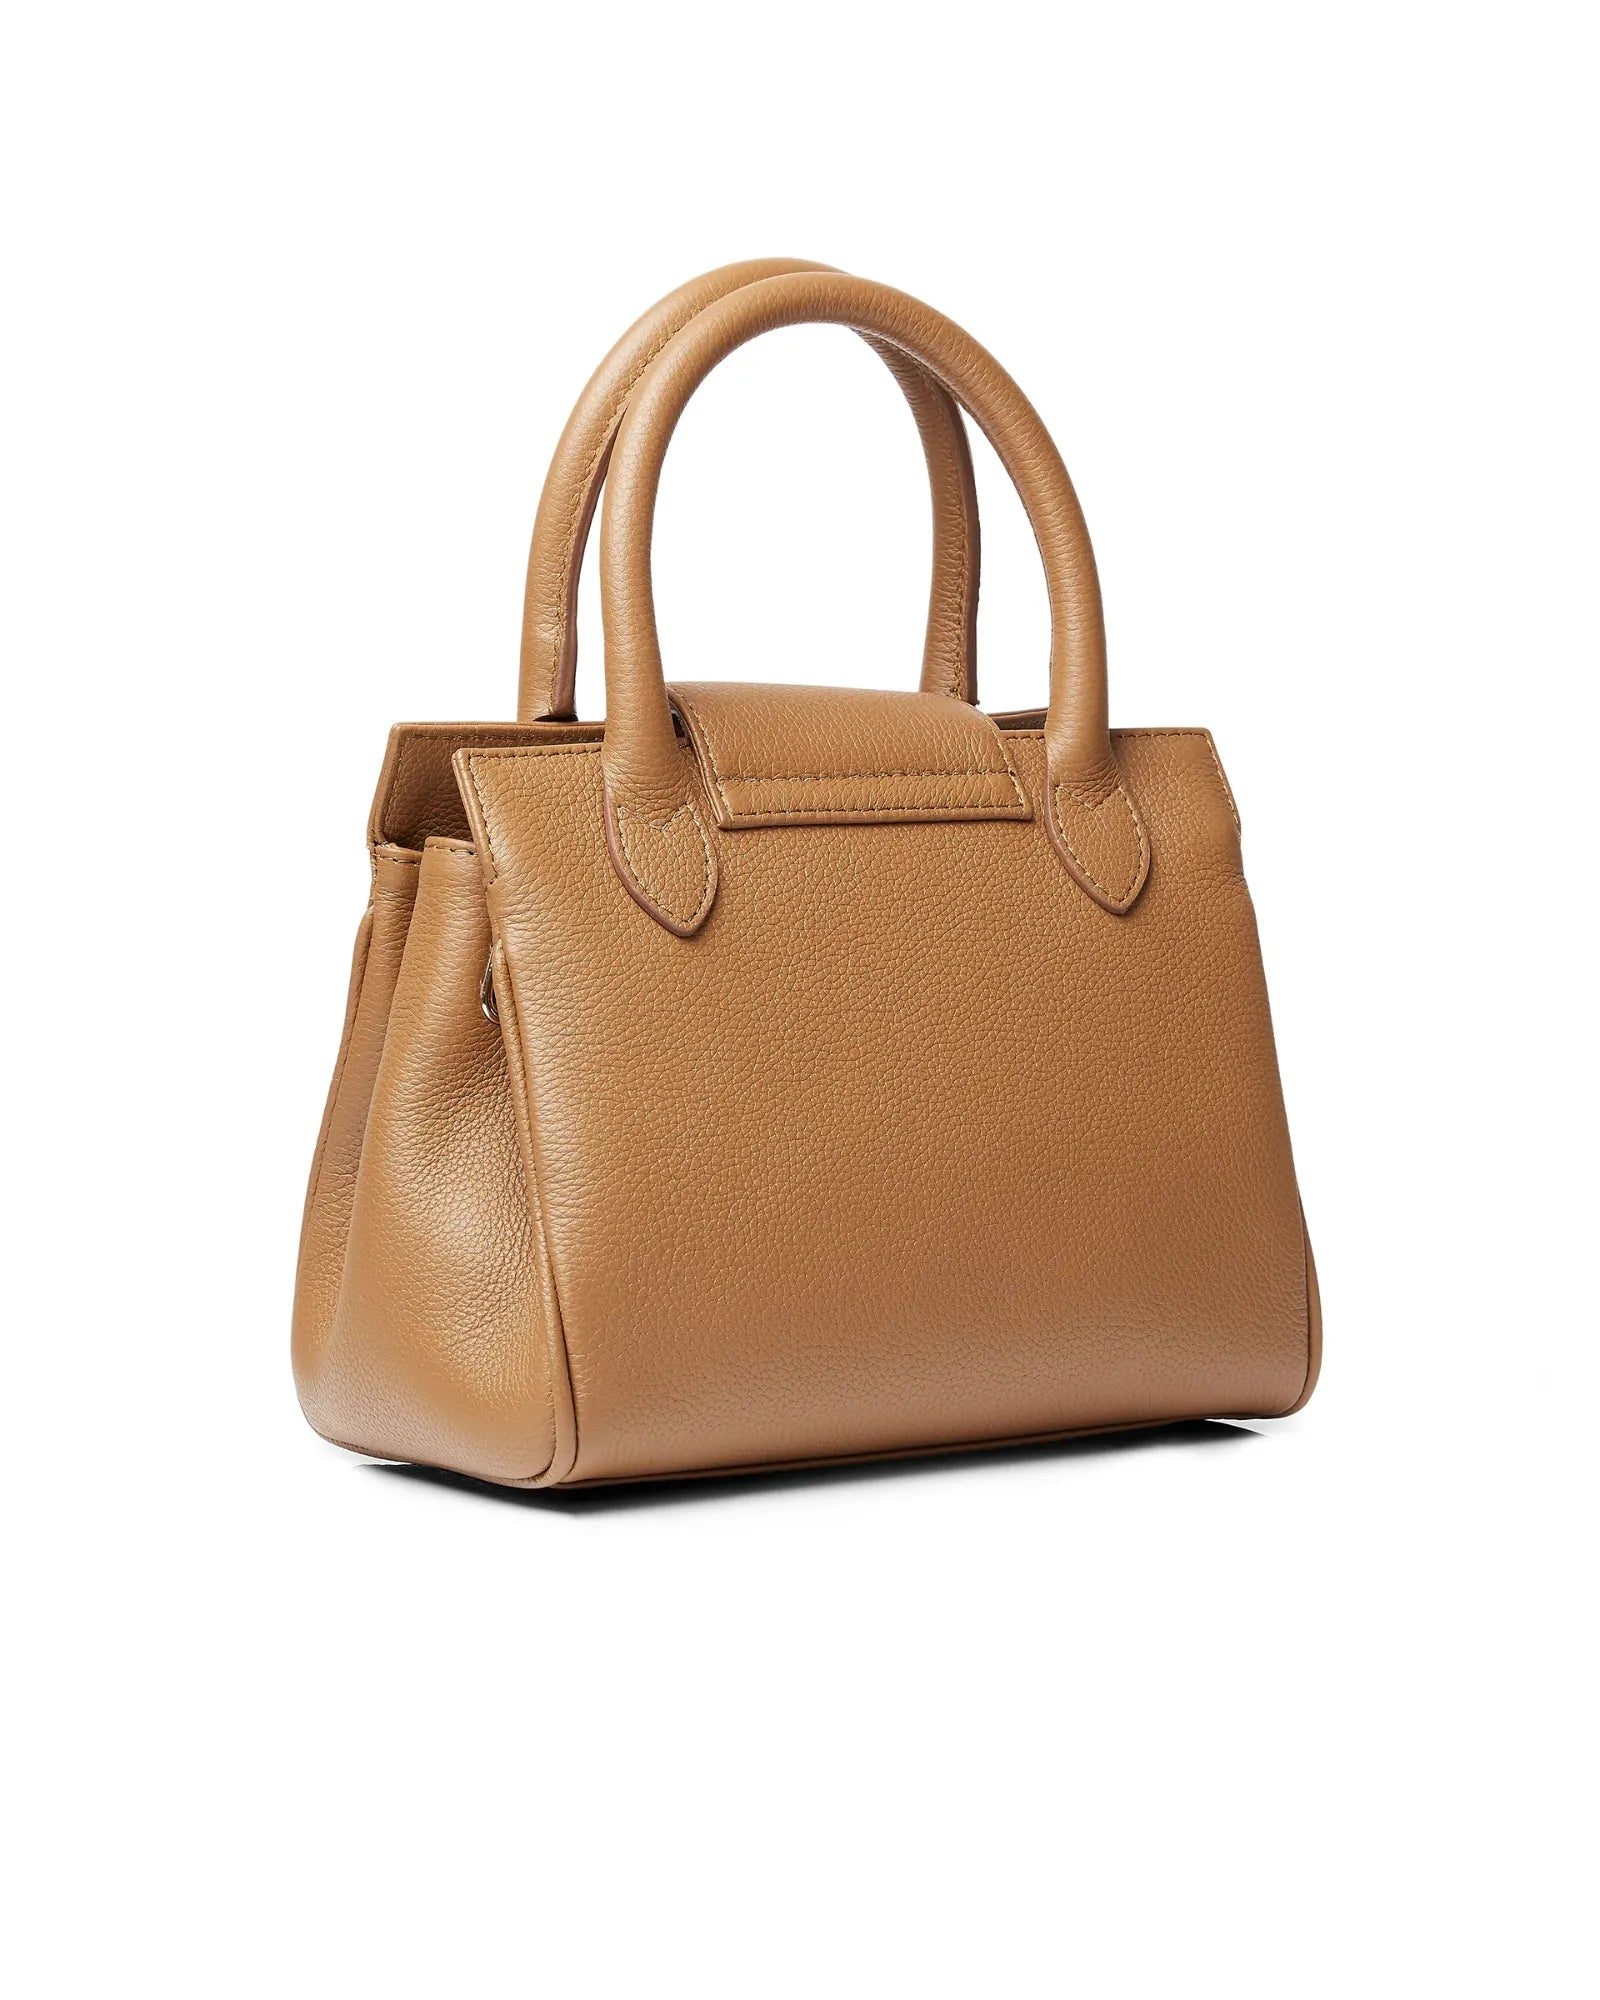 The Mini Windsor Handbag in Pebbled Tan Leather